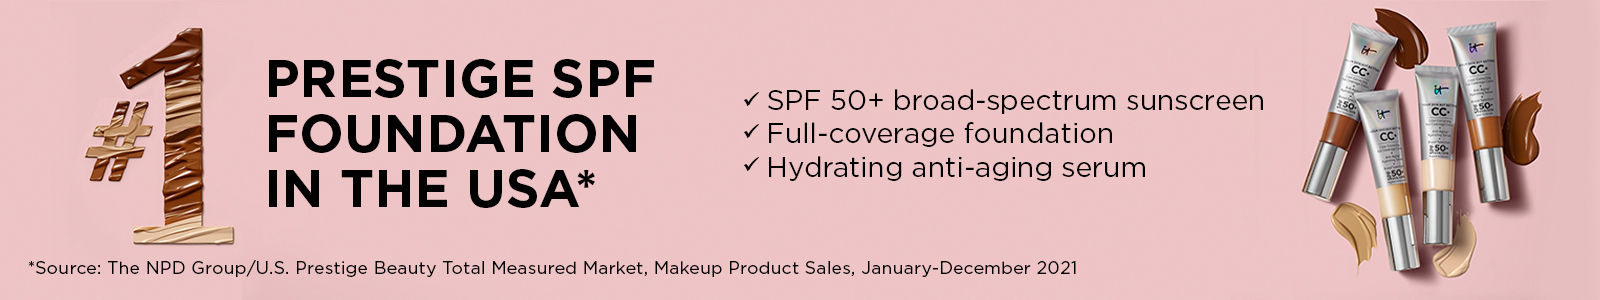 #1 Prestige SPF Foundation In The USA, SPF 50+ broad-spectrum sunscreen, Full-coverage foundation, Hydrating anti-aging serum